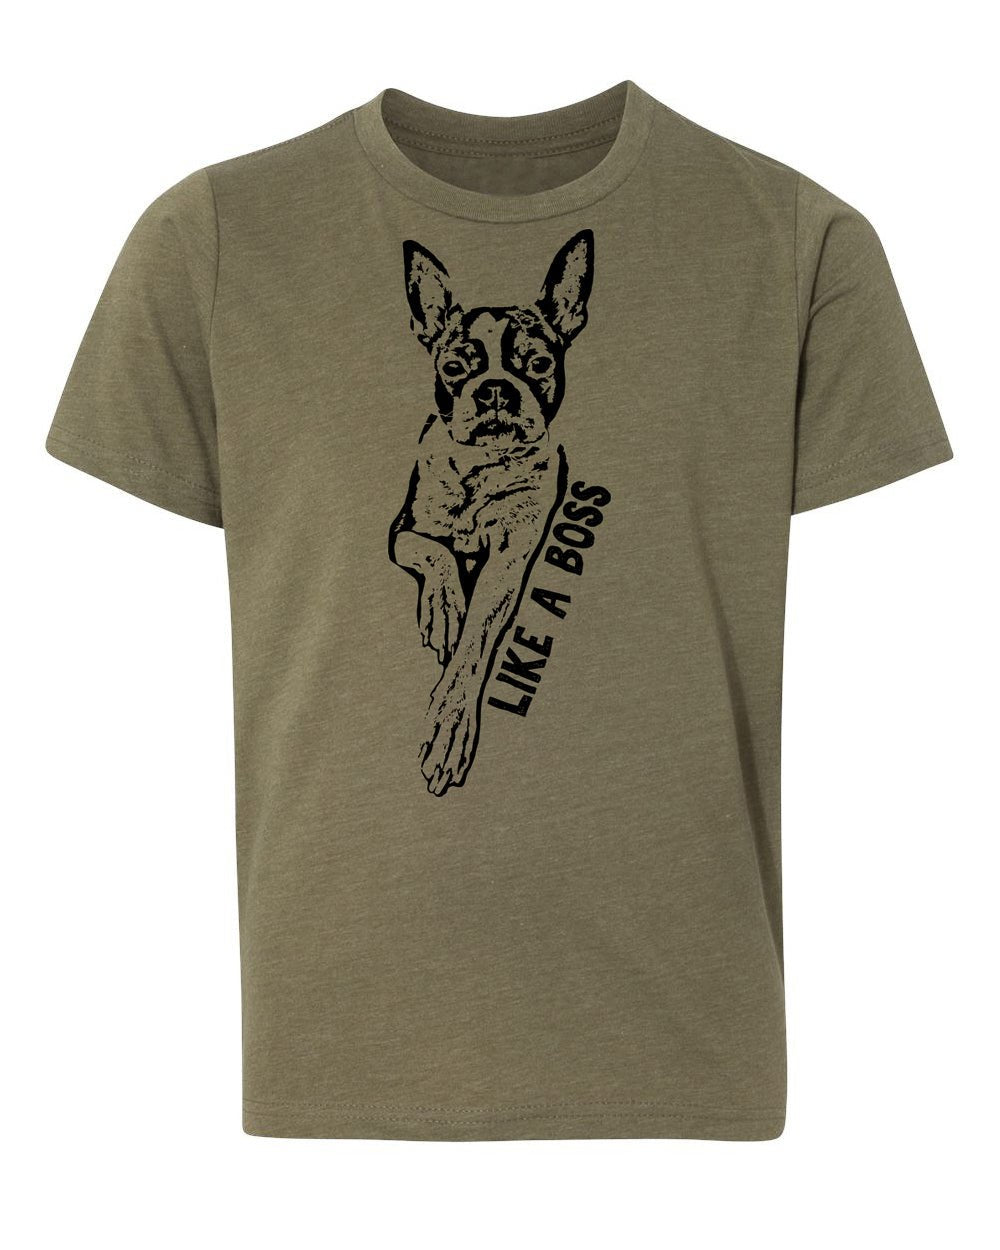 Boston Terrier "Like a Boss" Kids T Shirts - Mato & Hash